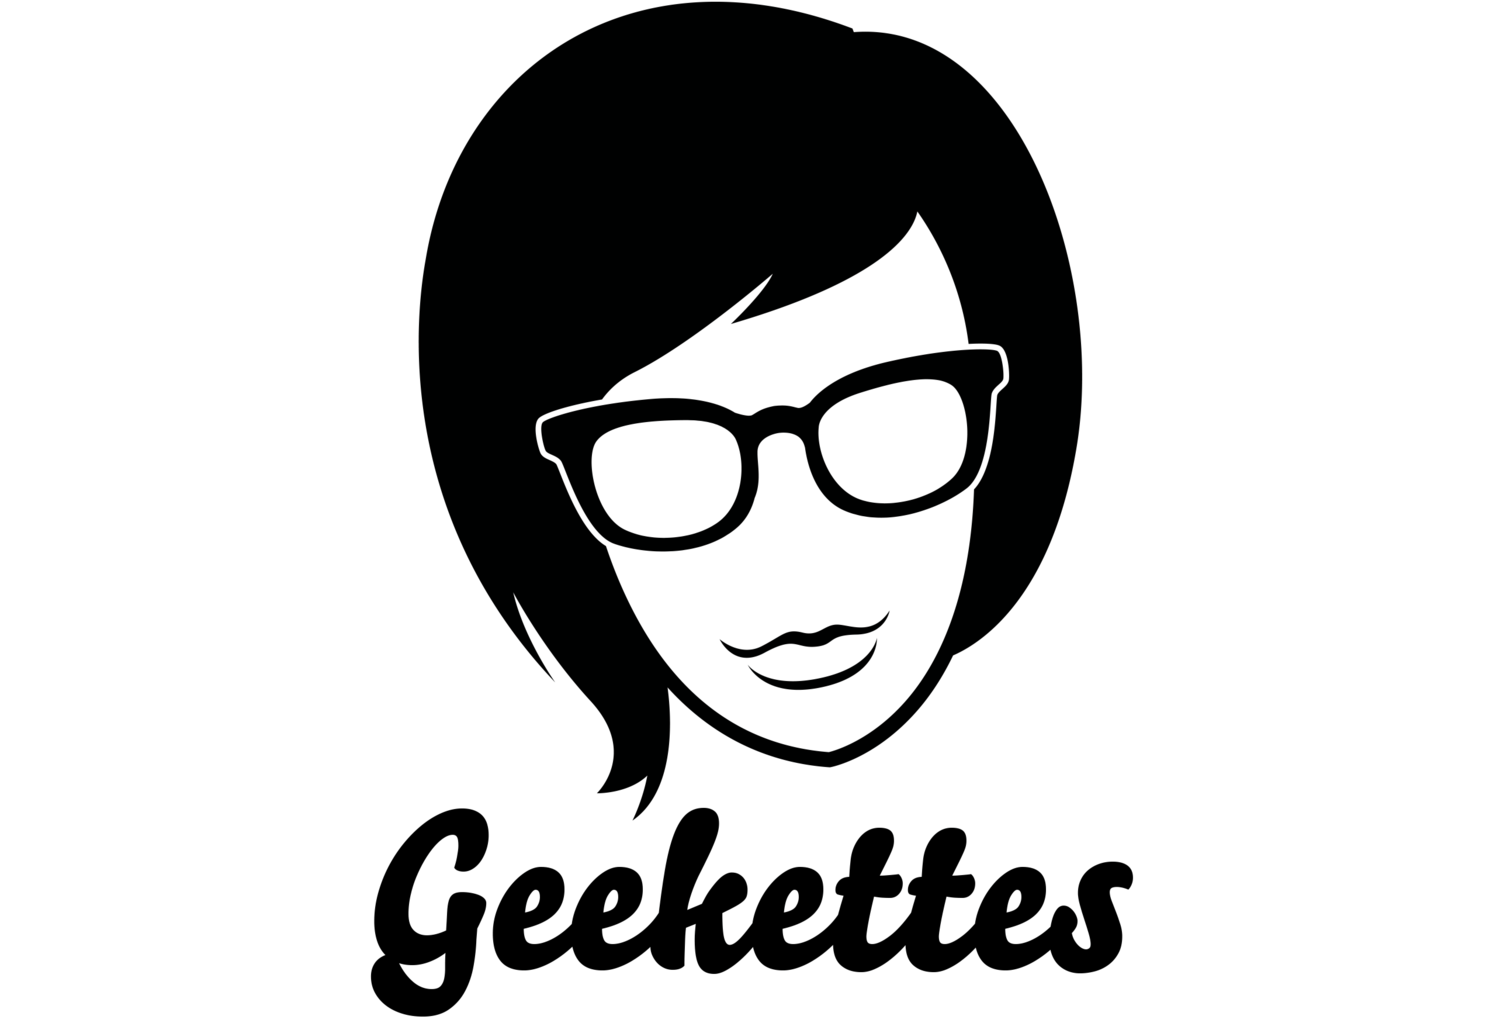 Geekettes